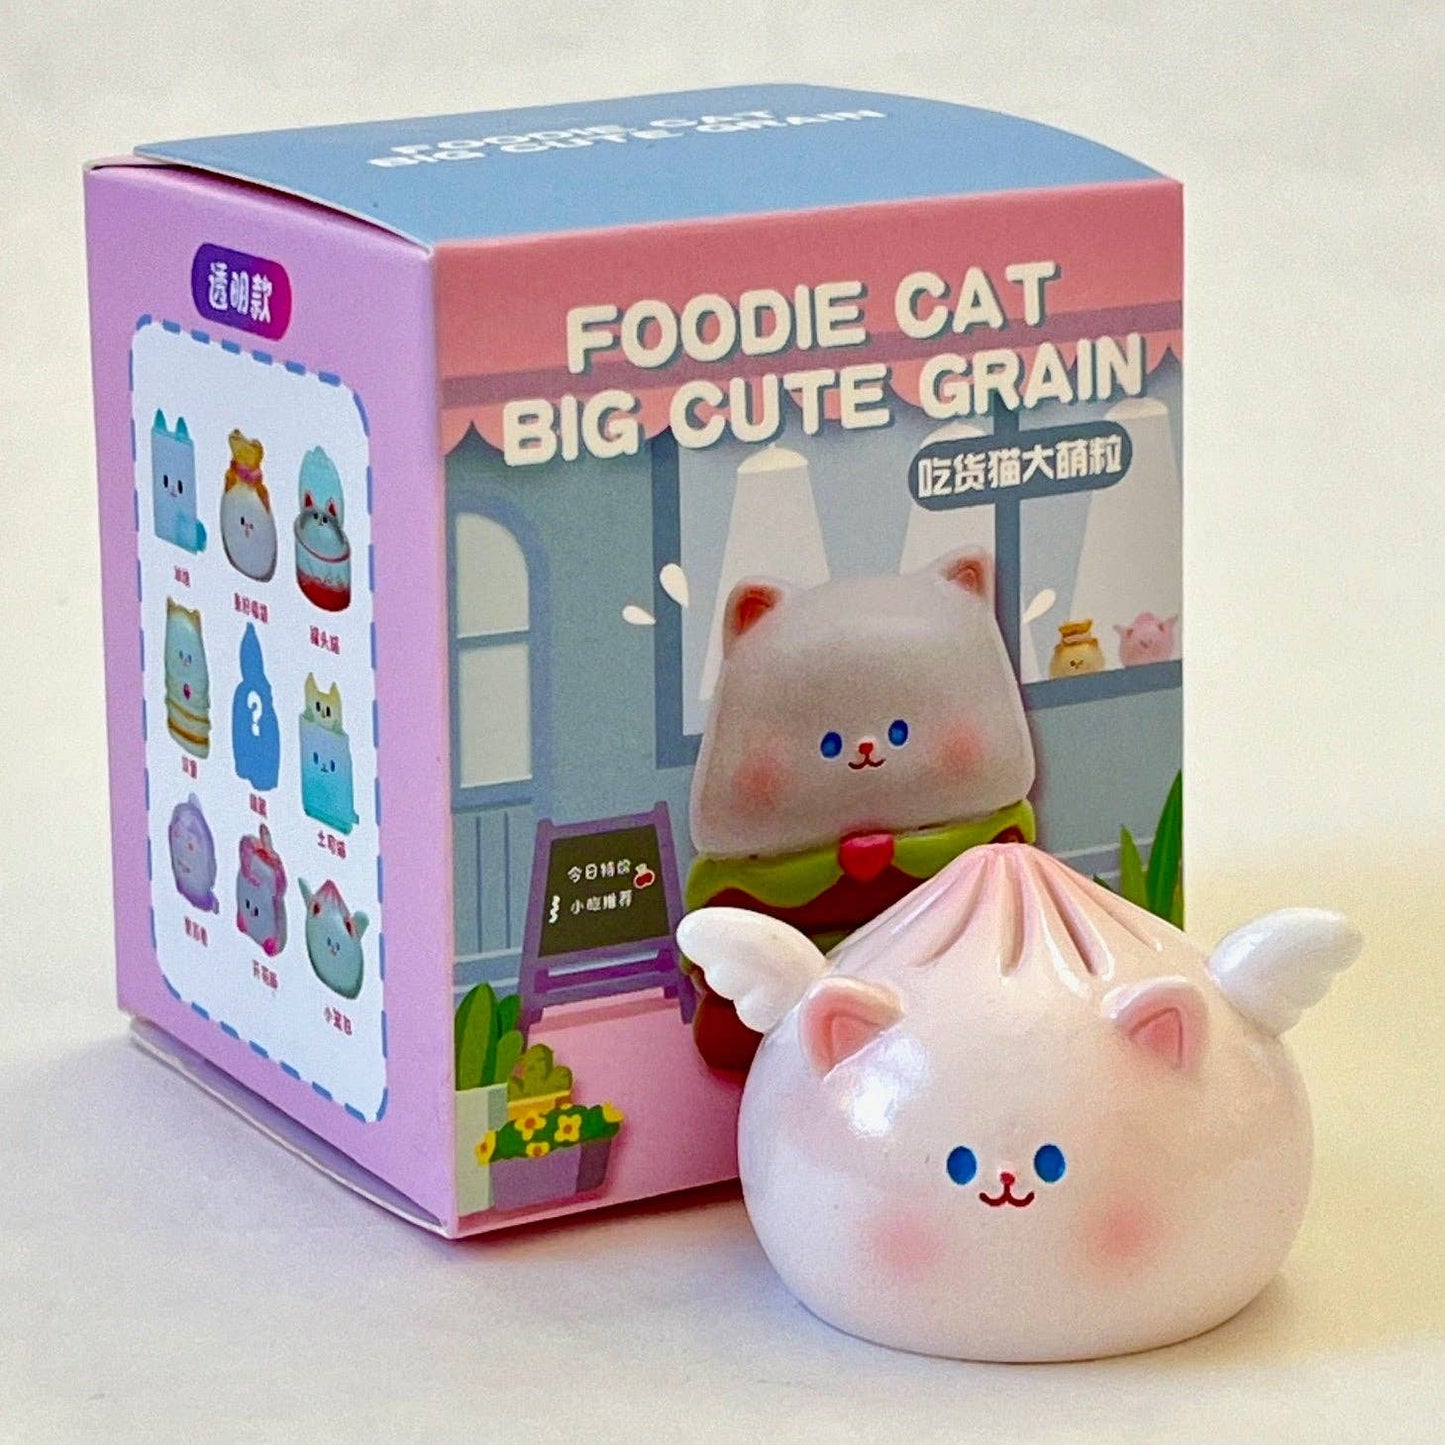 Foodie Cats Figurine Blind Box